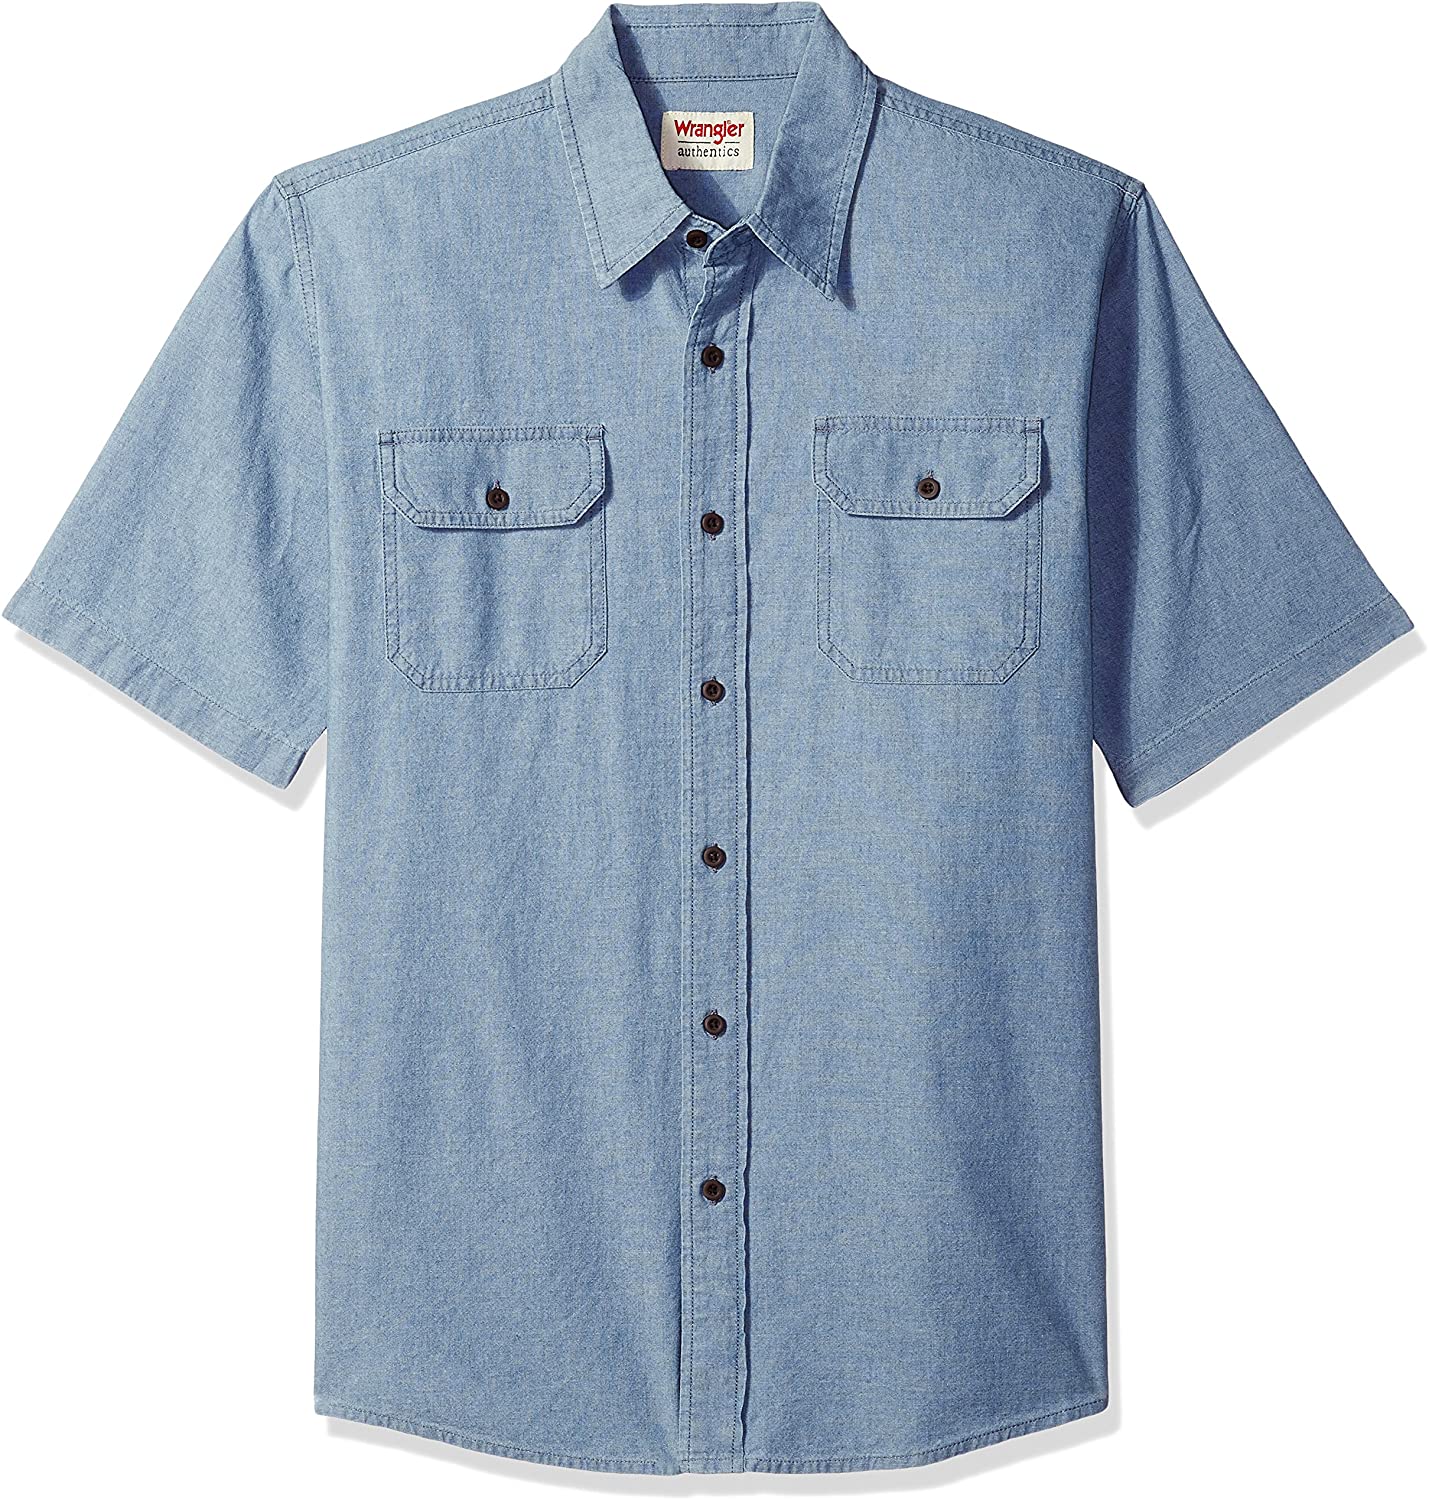 Wrangler Authentics Men's Short Sleeve Classic Woven Shirt | eBay